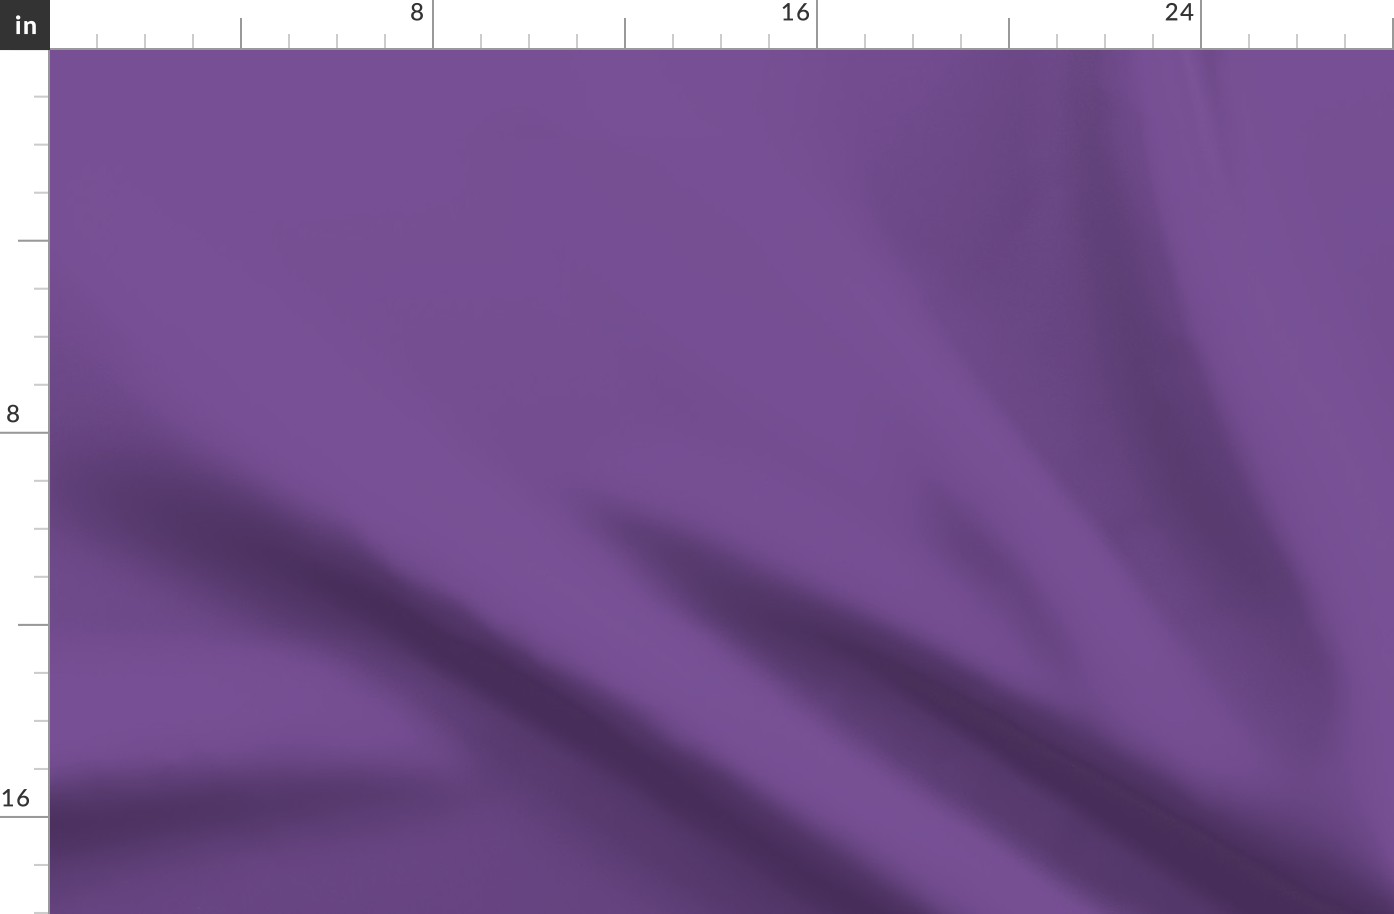 Solid, Purple, Lilac, Lavender, Violet, Amethyst, Plum, solid purple, purple fabric, #purple #solid JG Anchor Designs